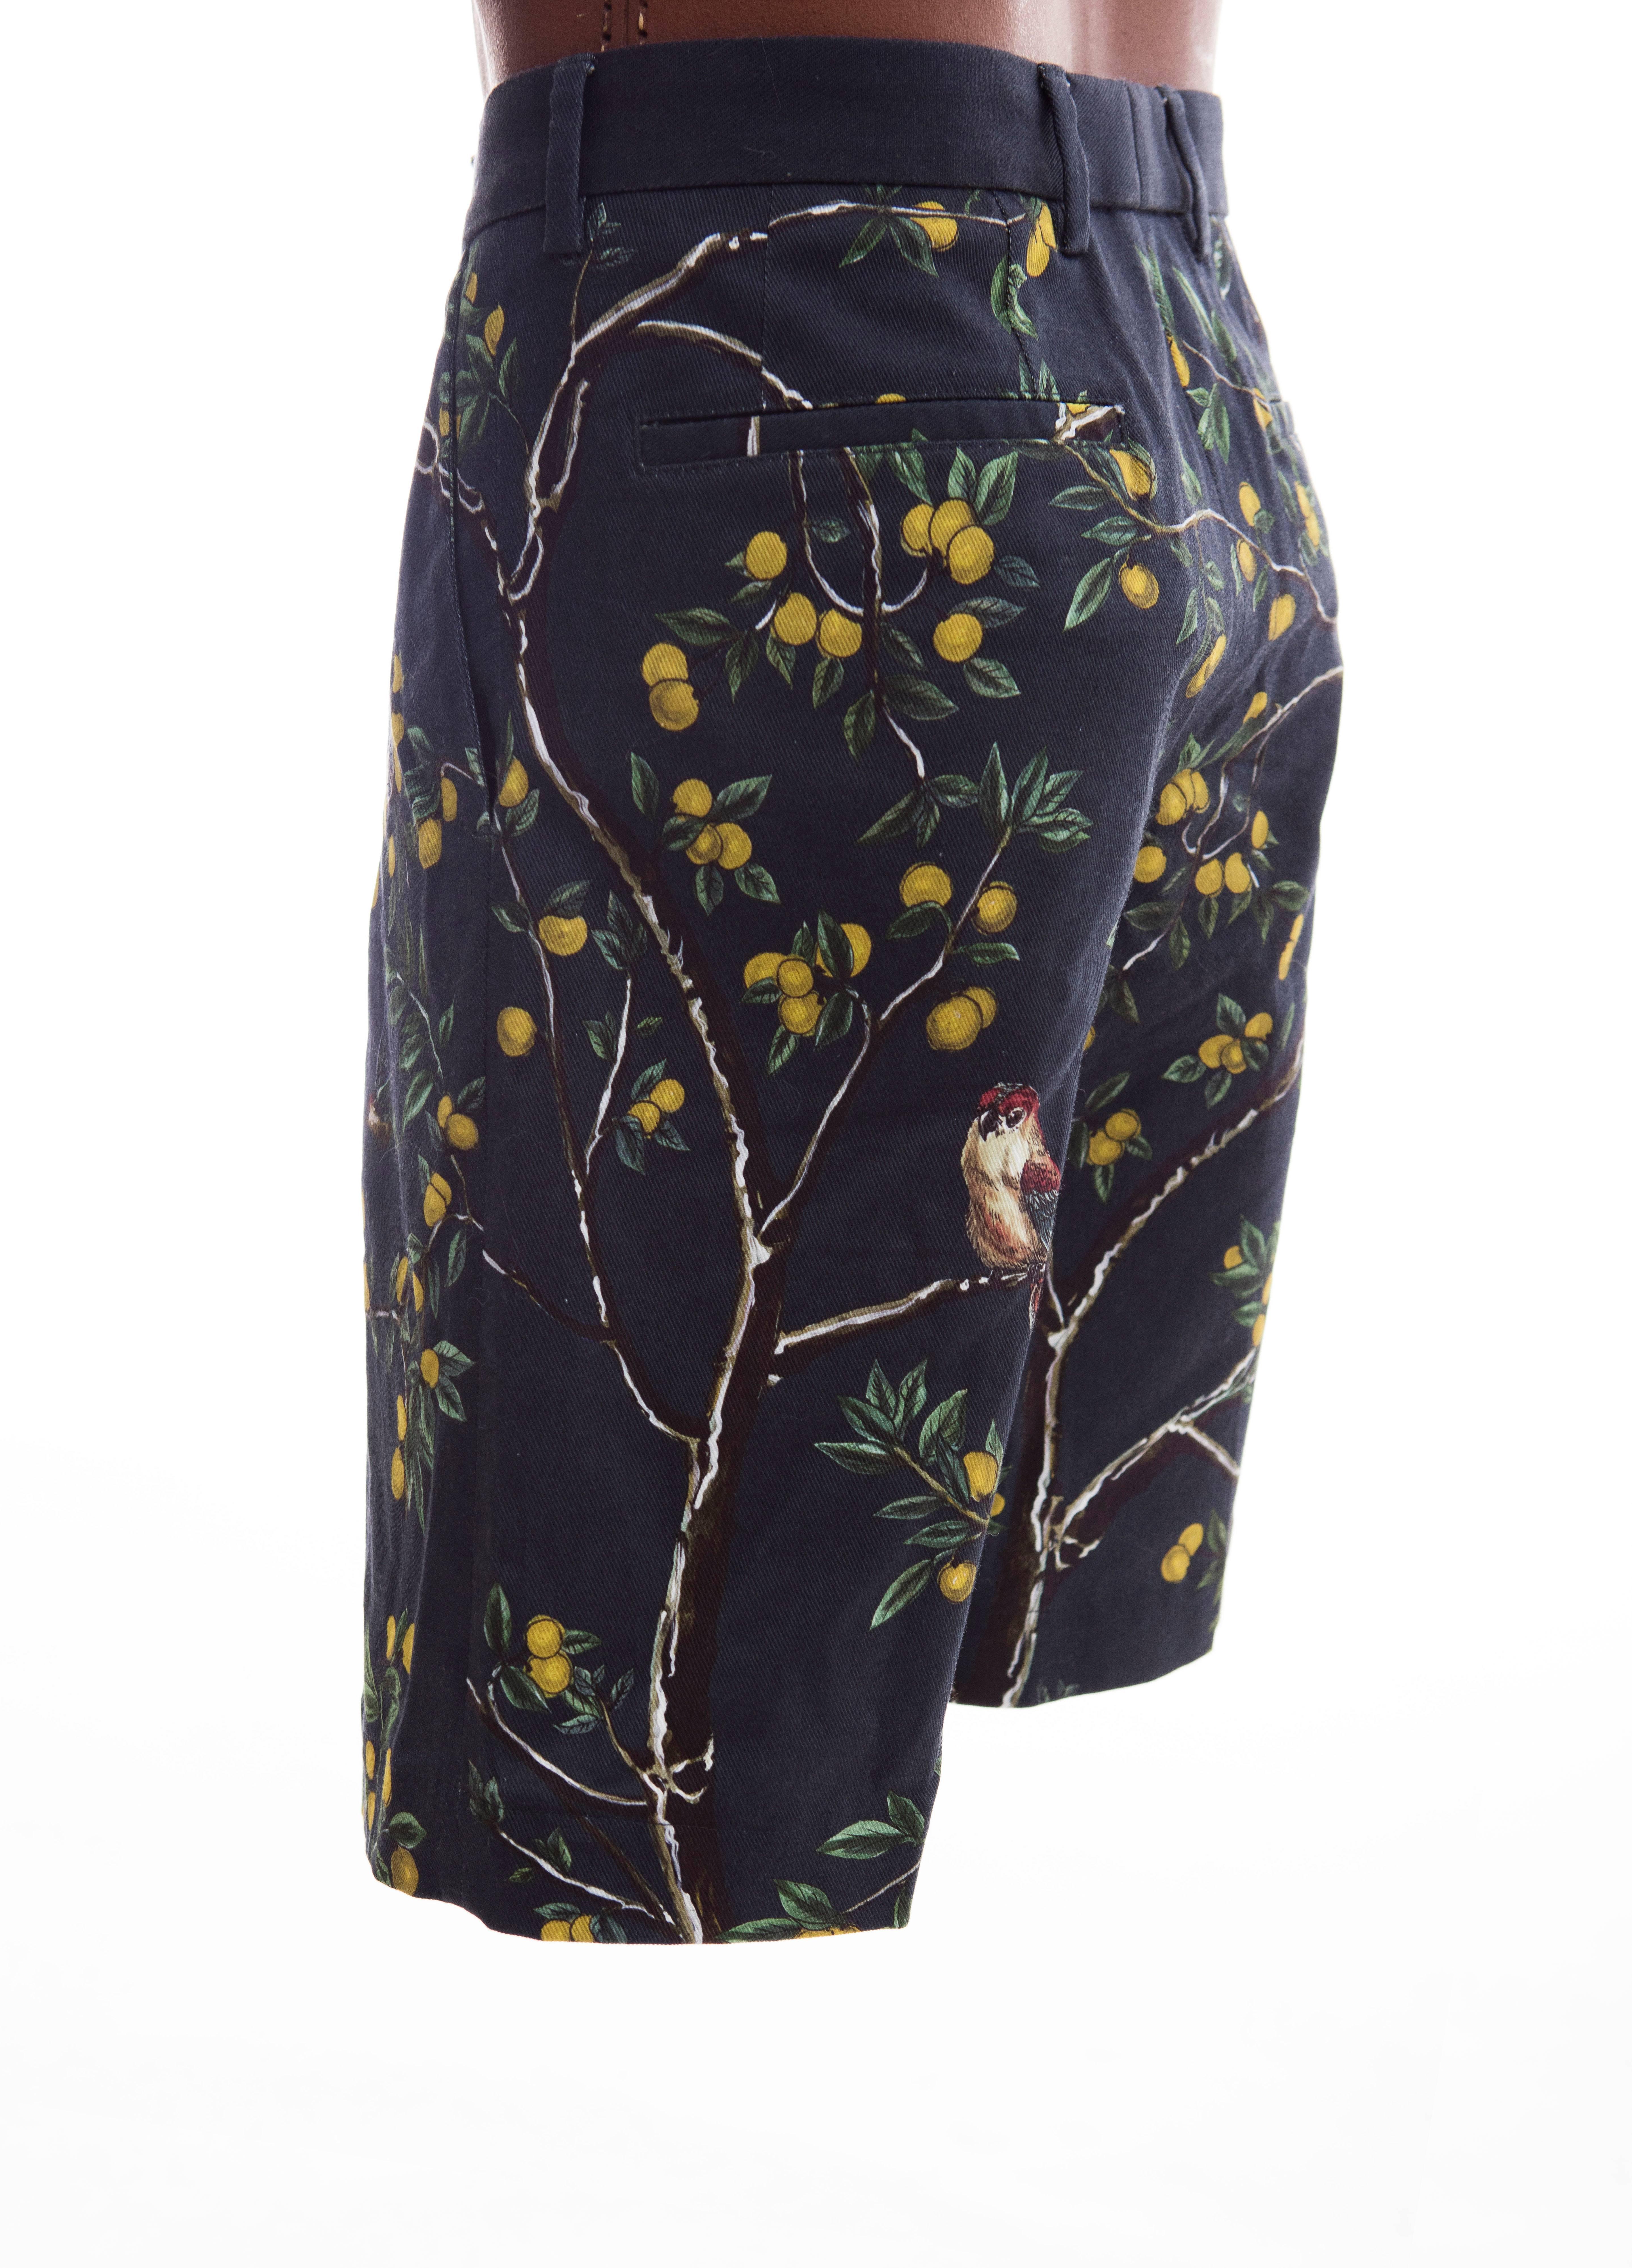 Dolce & Gabbana Men's Black Printed Birds Lemons Cotton Shorts, Spring 2016 3